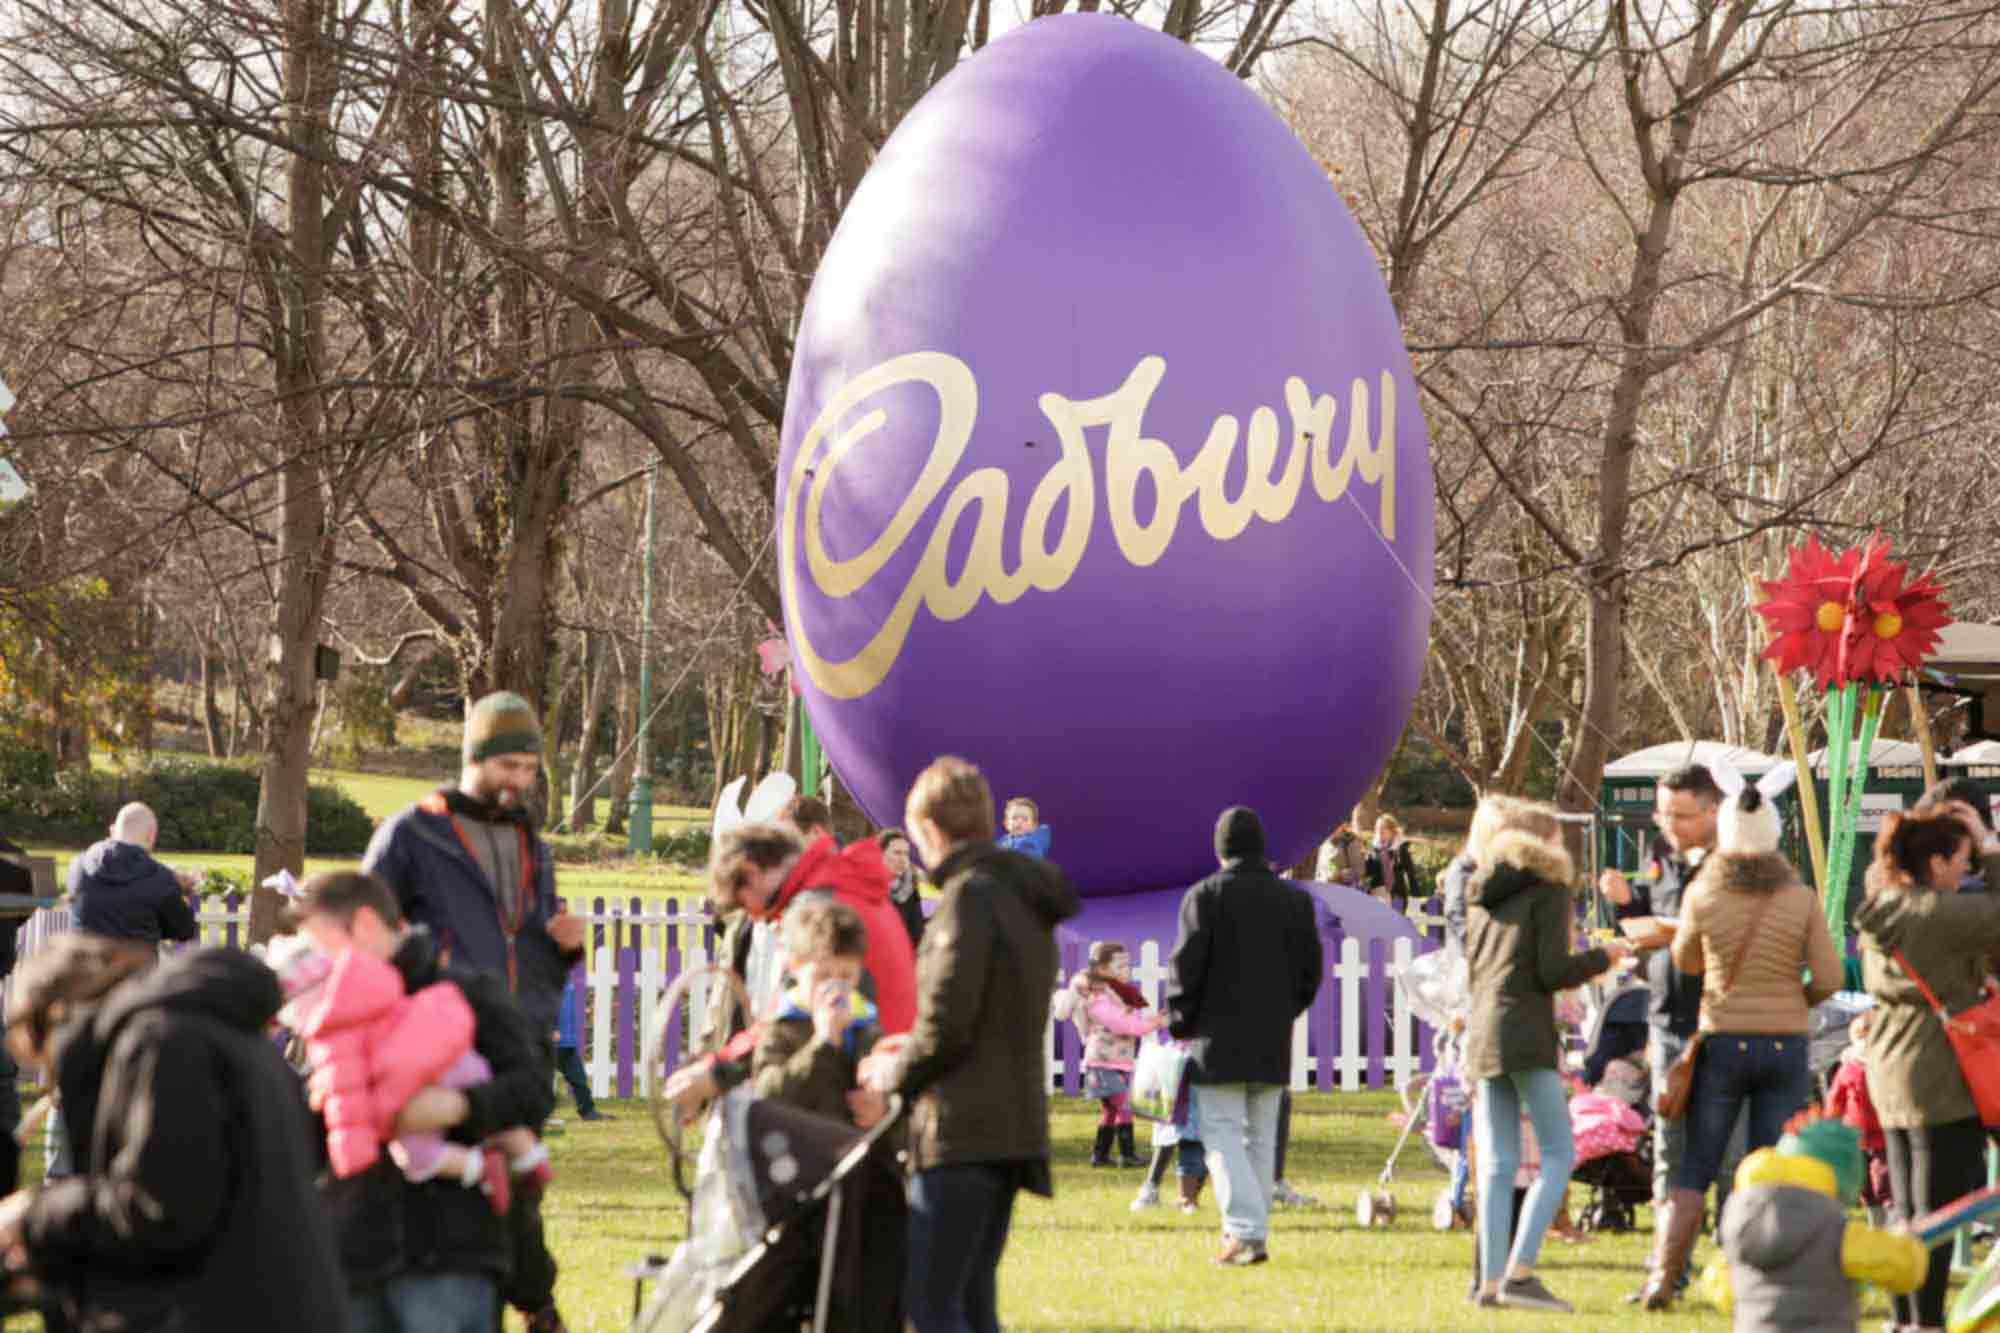 Cadbury inflatable egg in a park